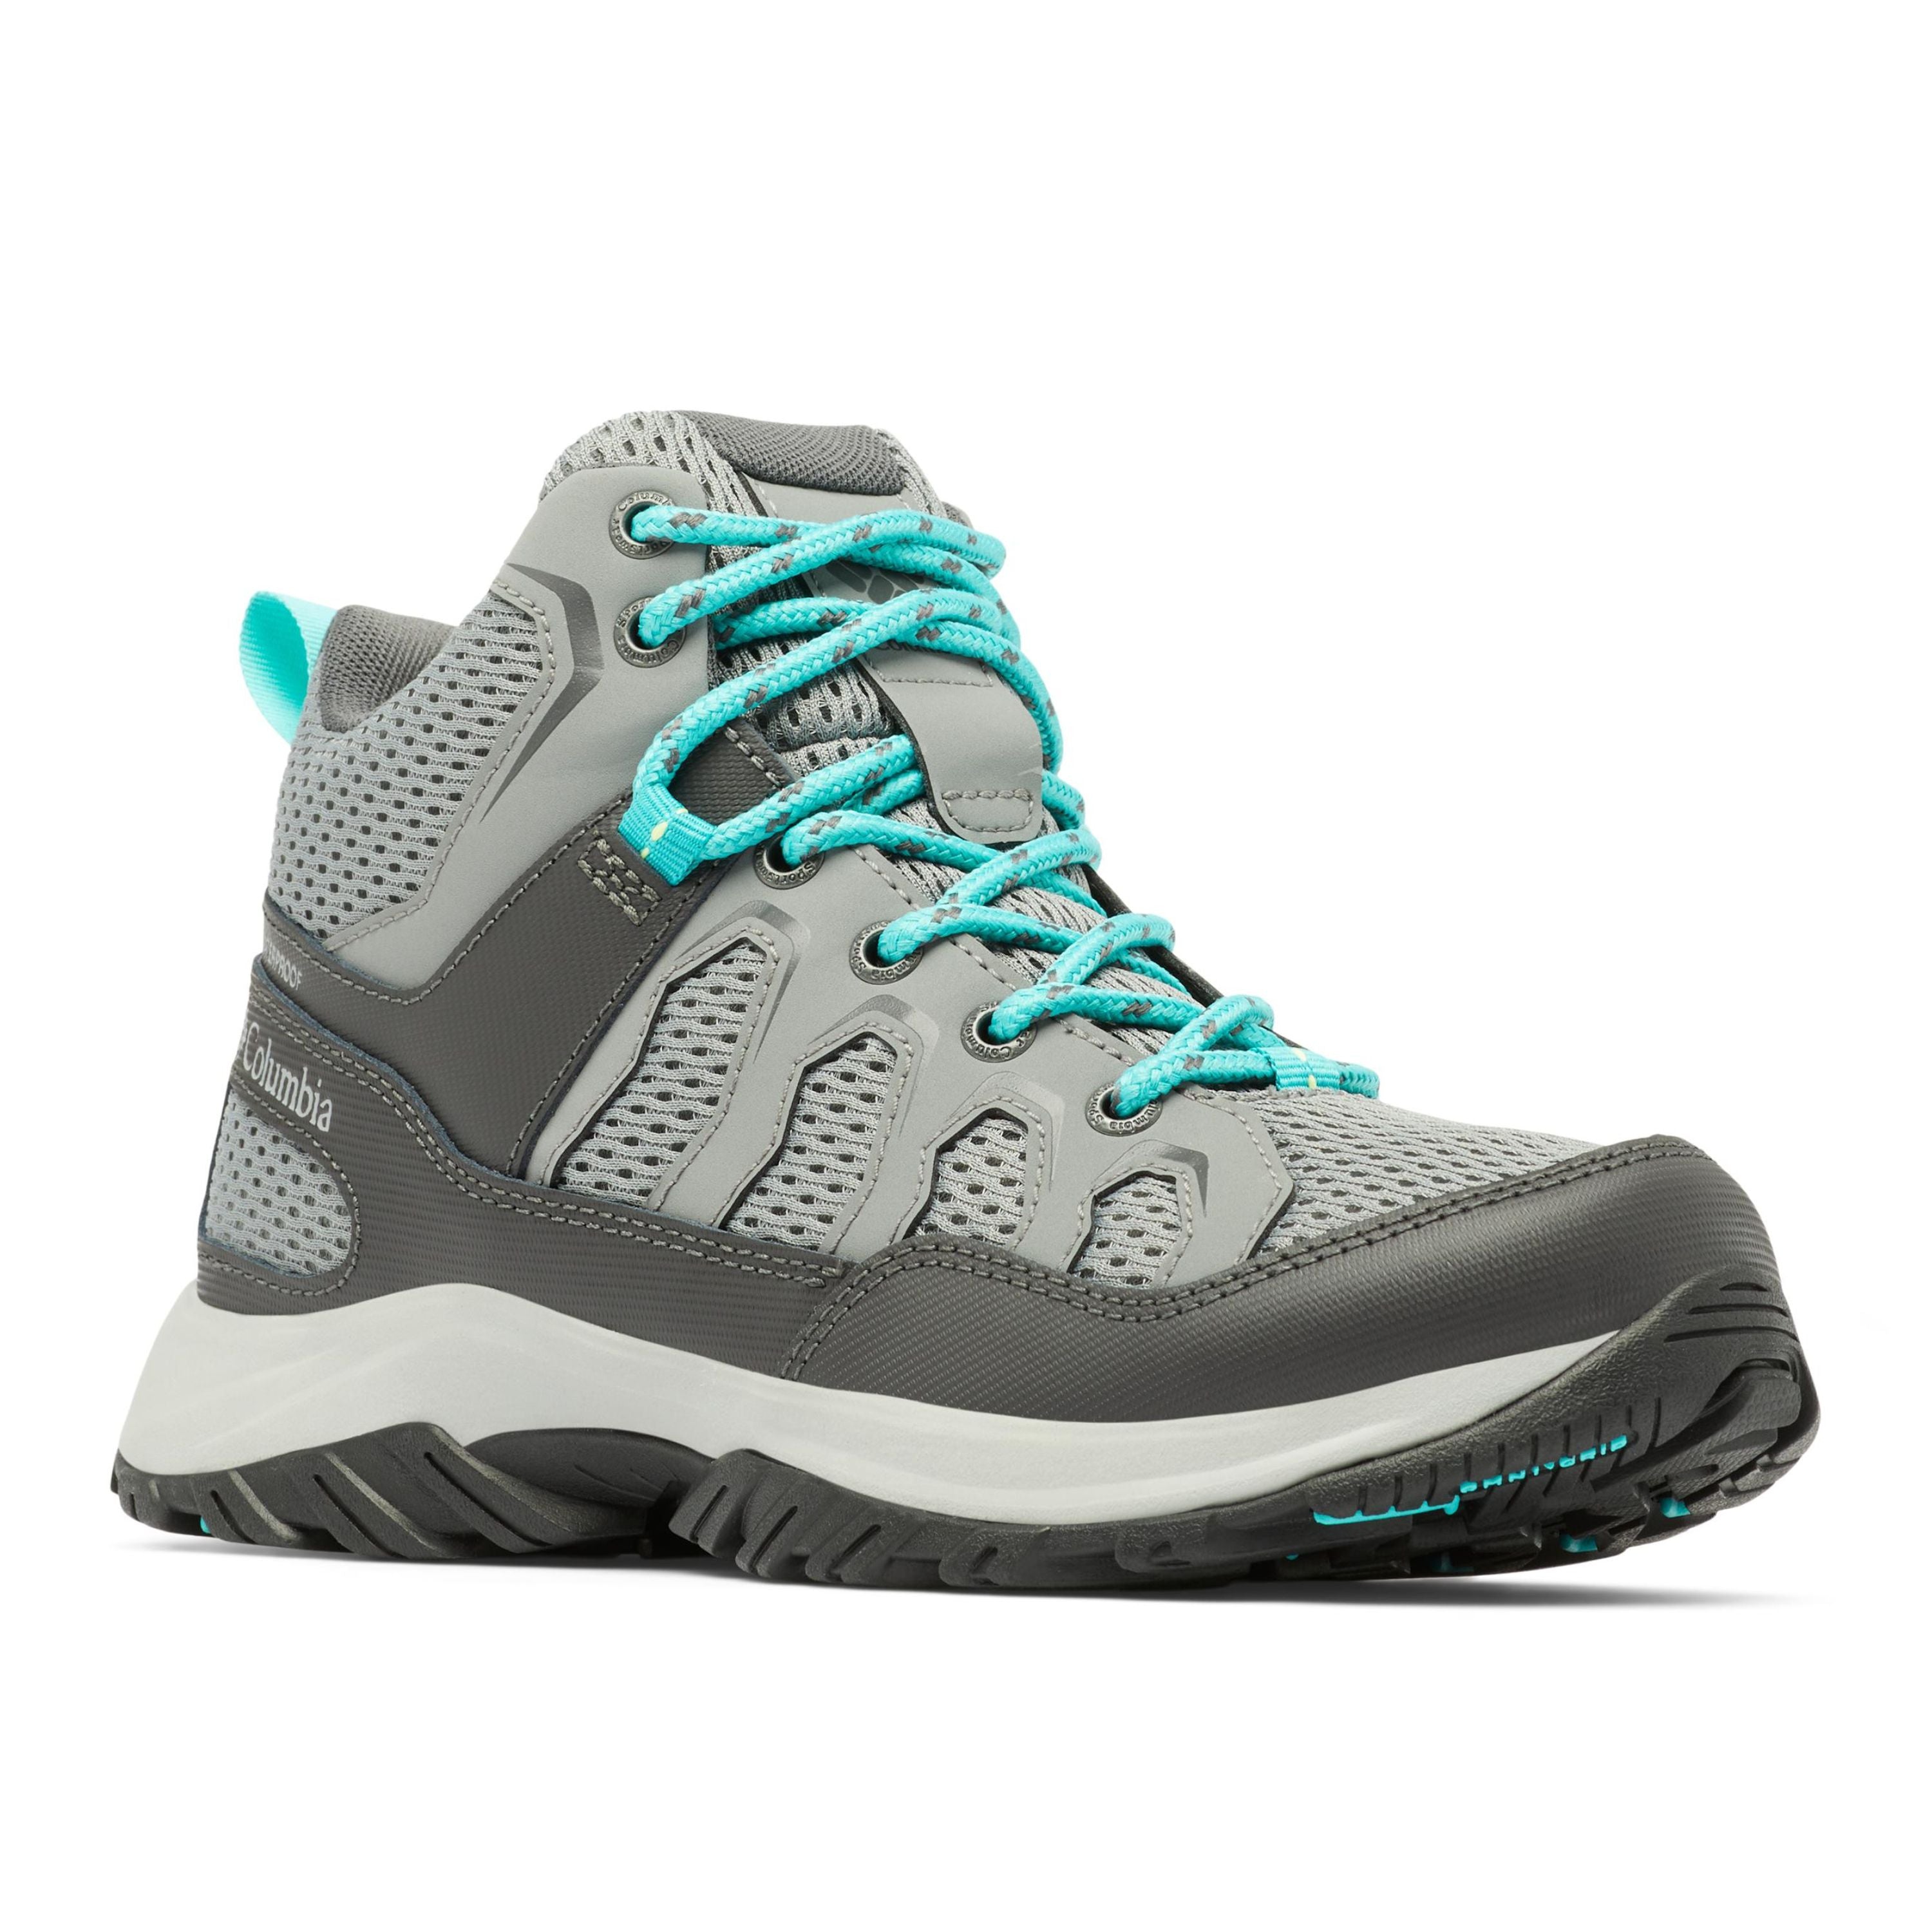 "Granite Trail" Hiking boots - Women's